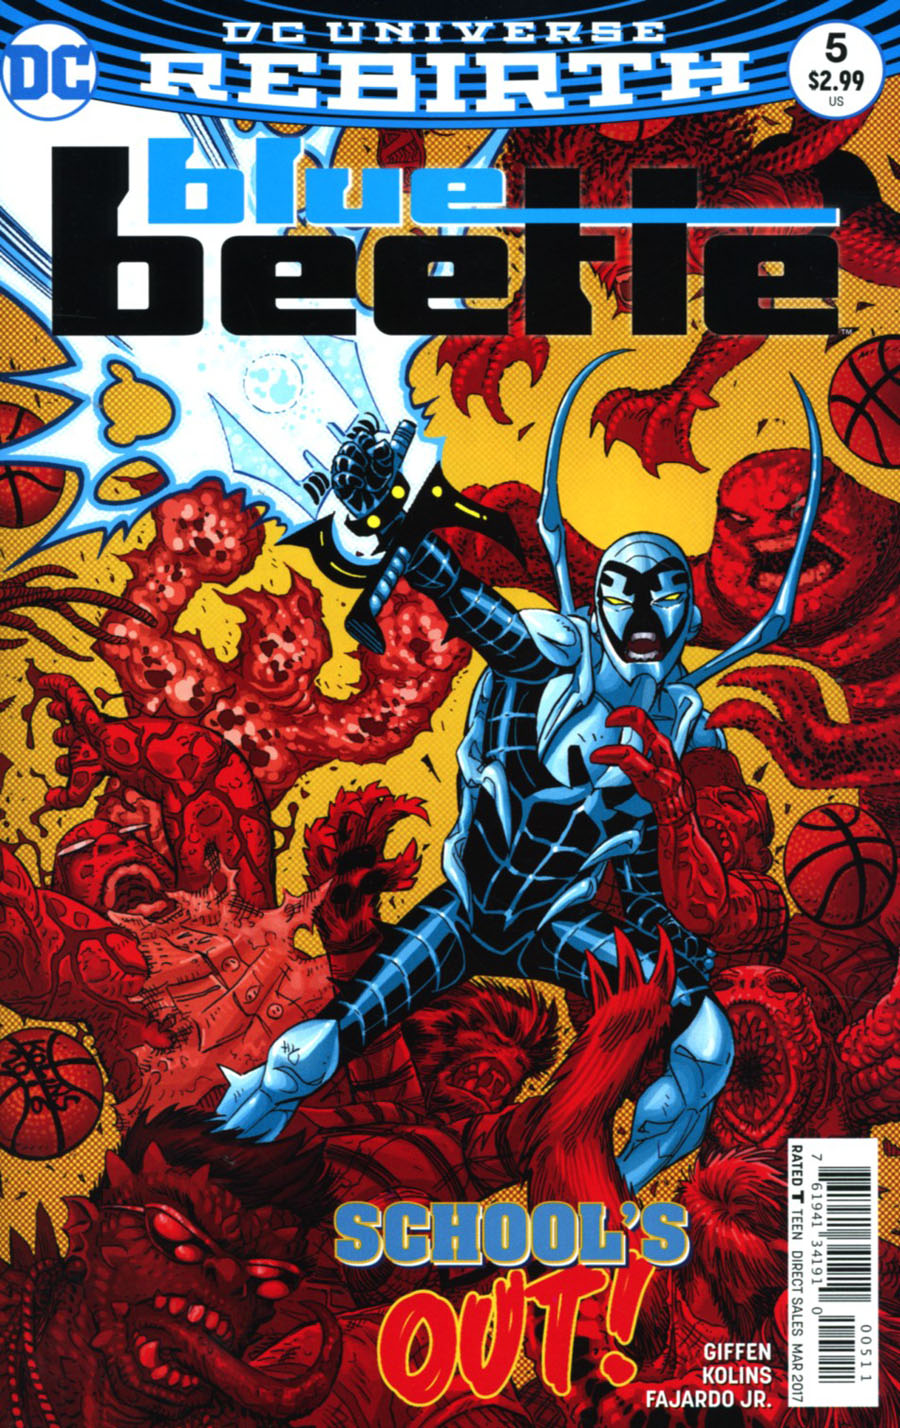 Blue Beetle (DC) Vol 4 #5 Cover A Regular Scott Kolins Cover